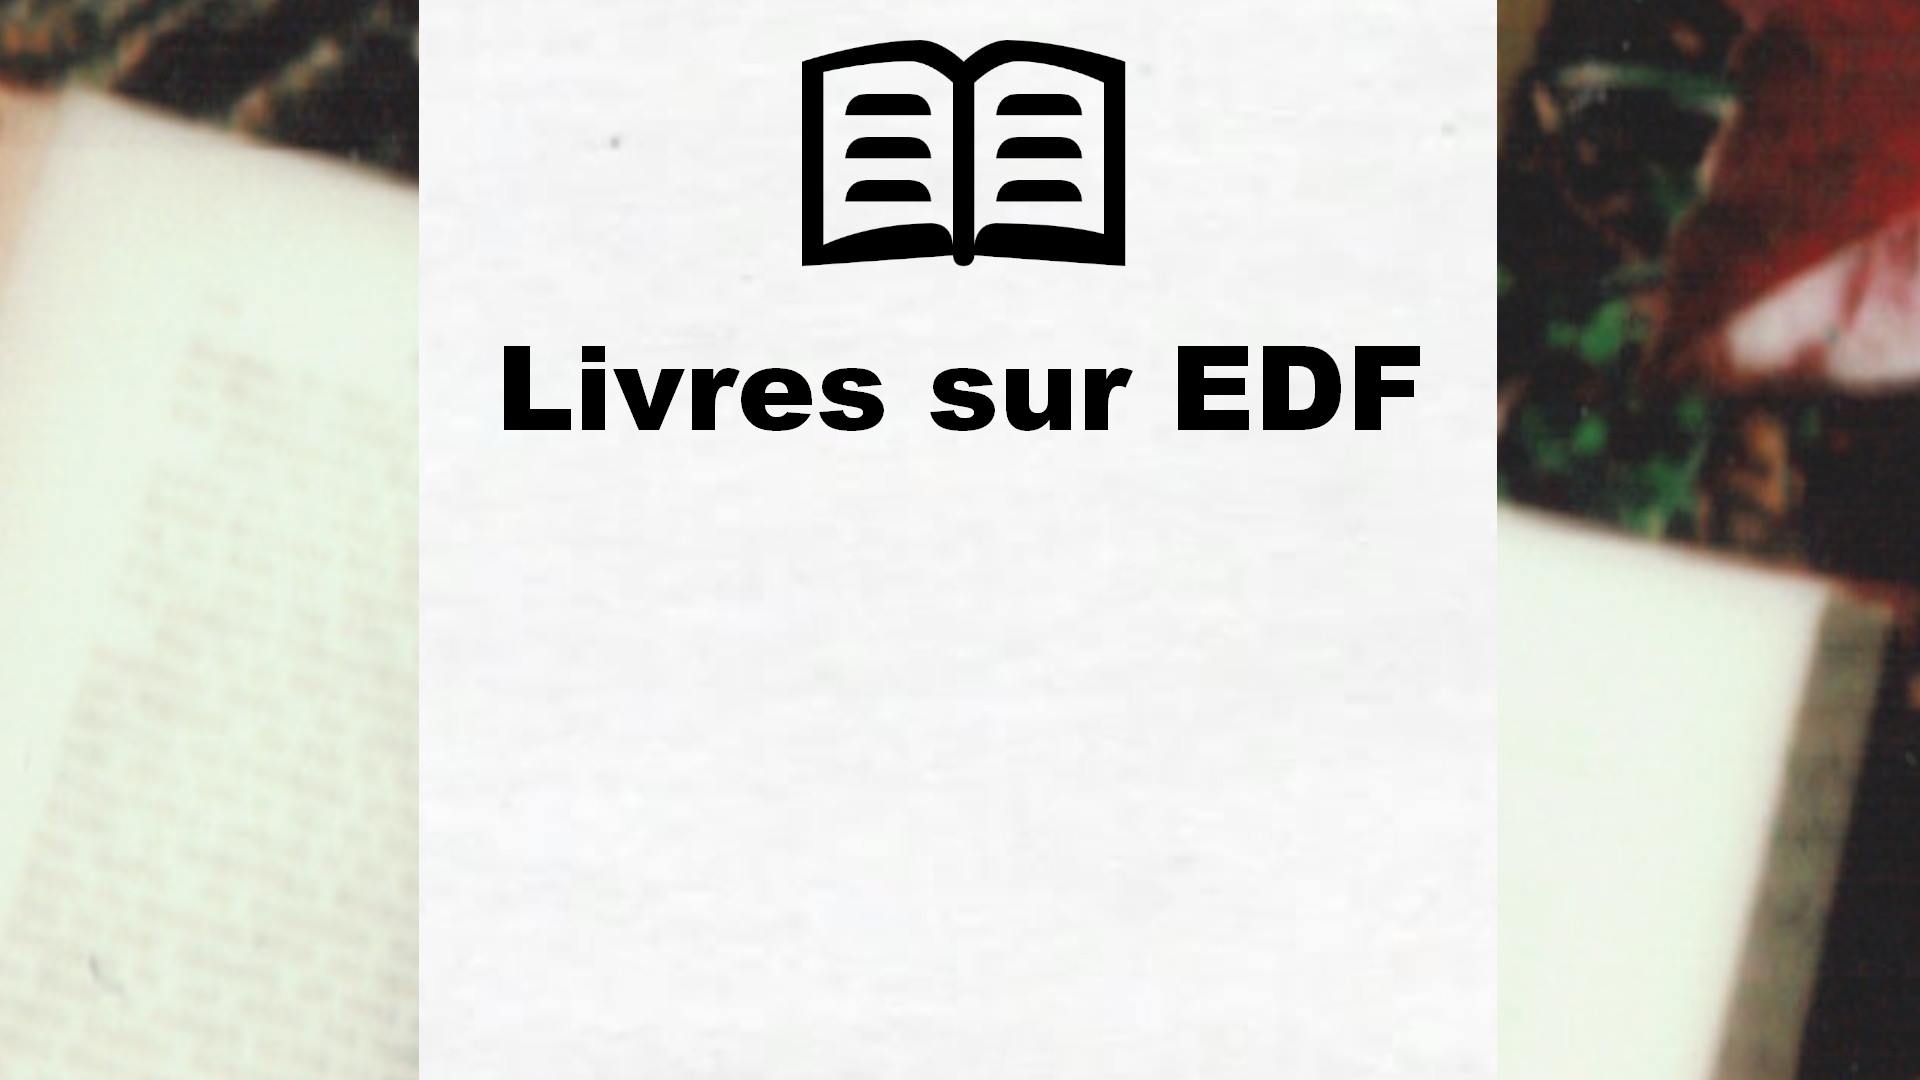 Livres sur EDF